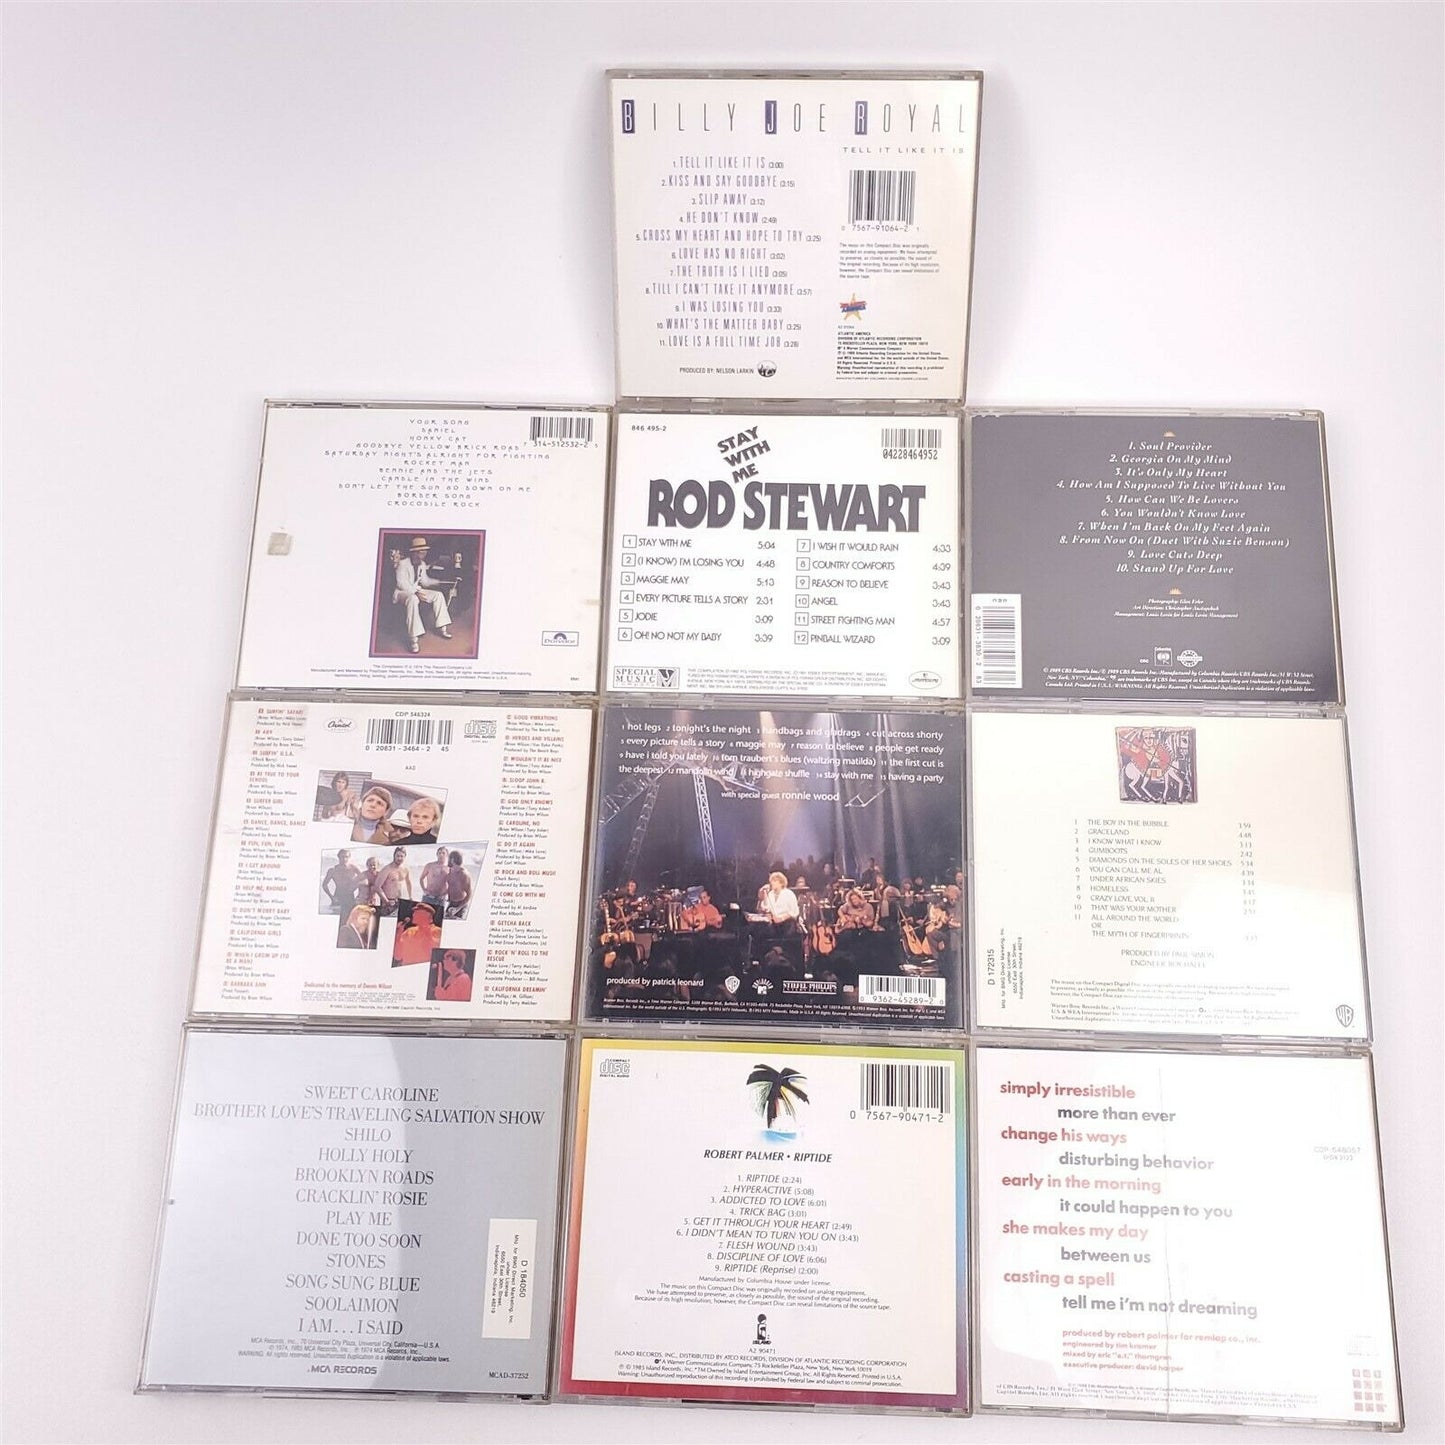 10 Pop Soft Rock CDs Robert Palmer Paul Simon Neil Diamond Elton John Beach Boys